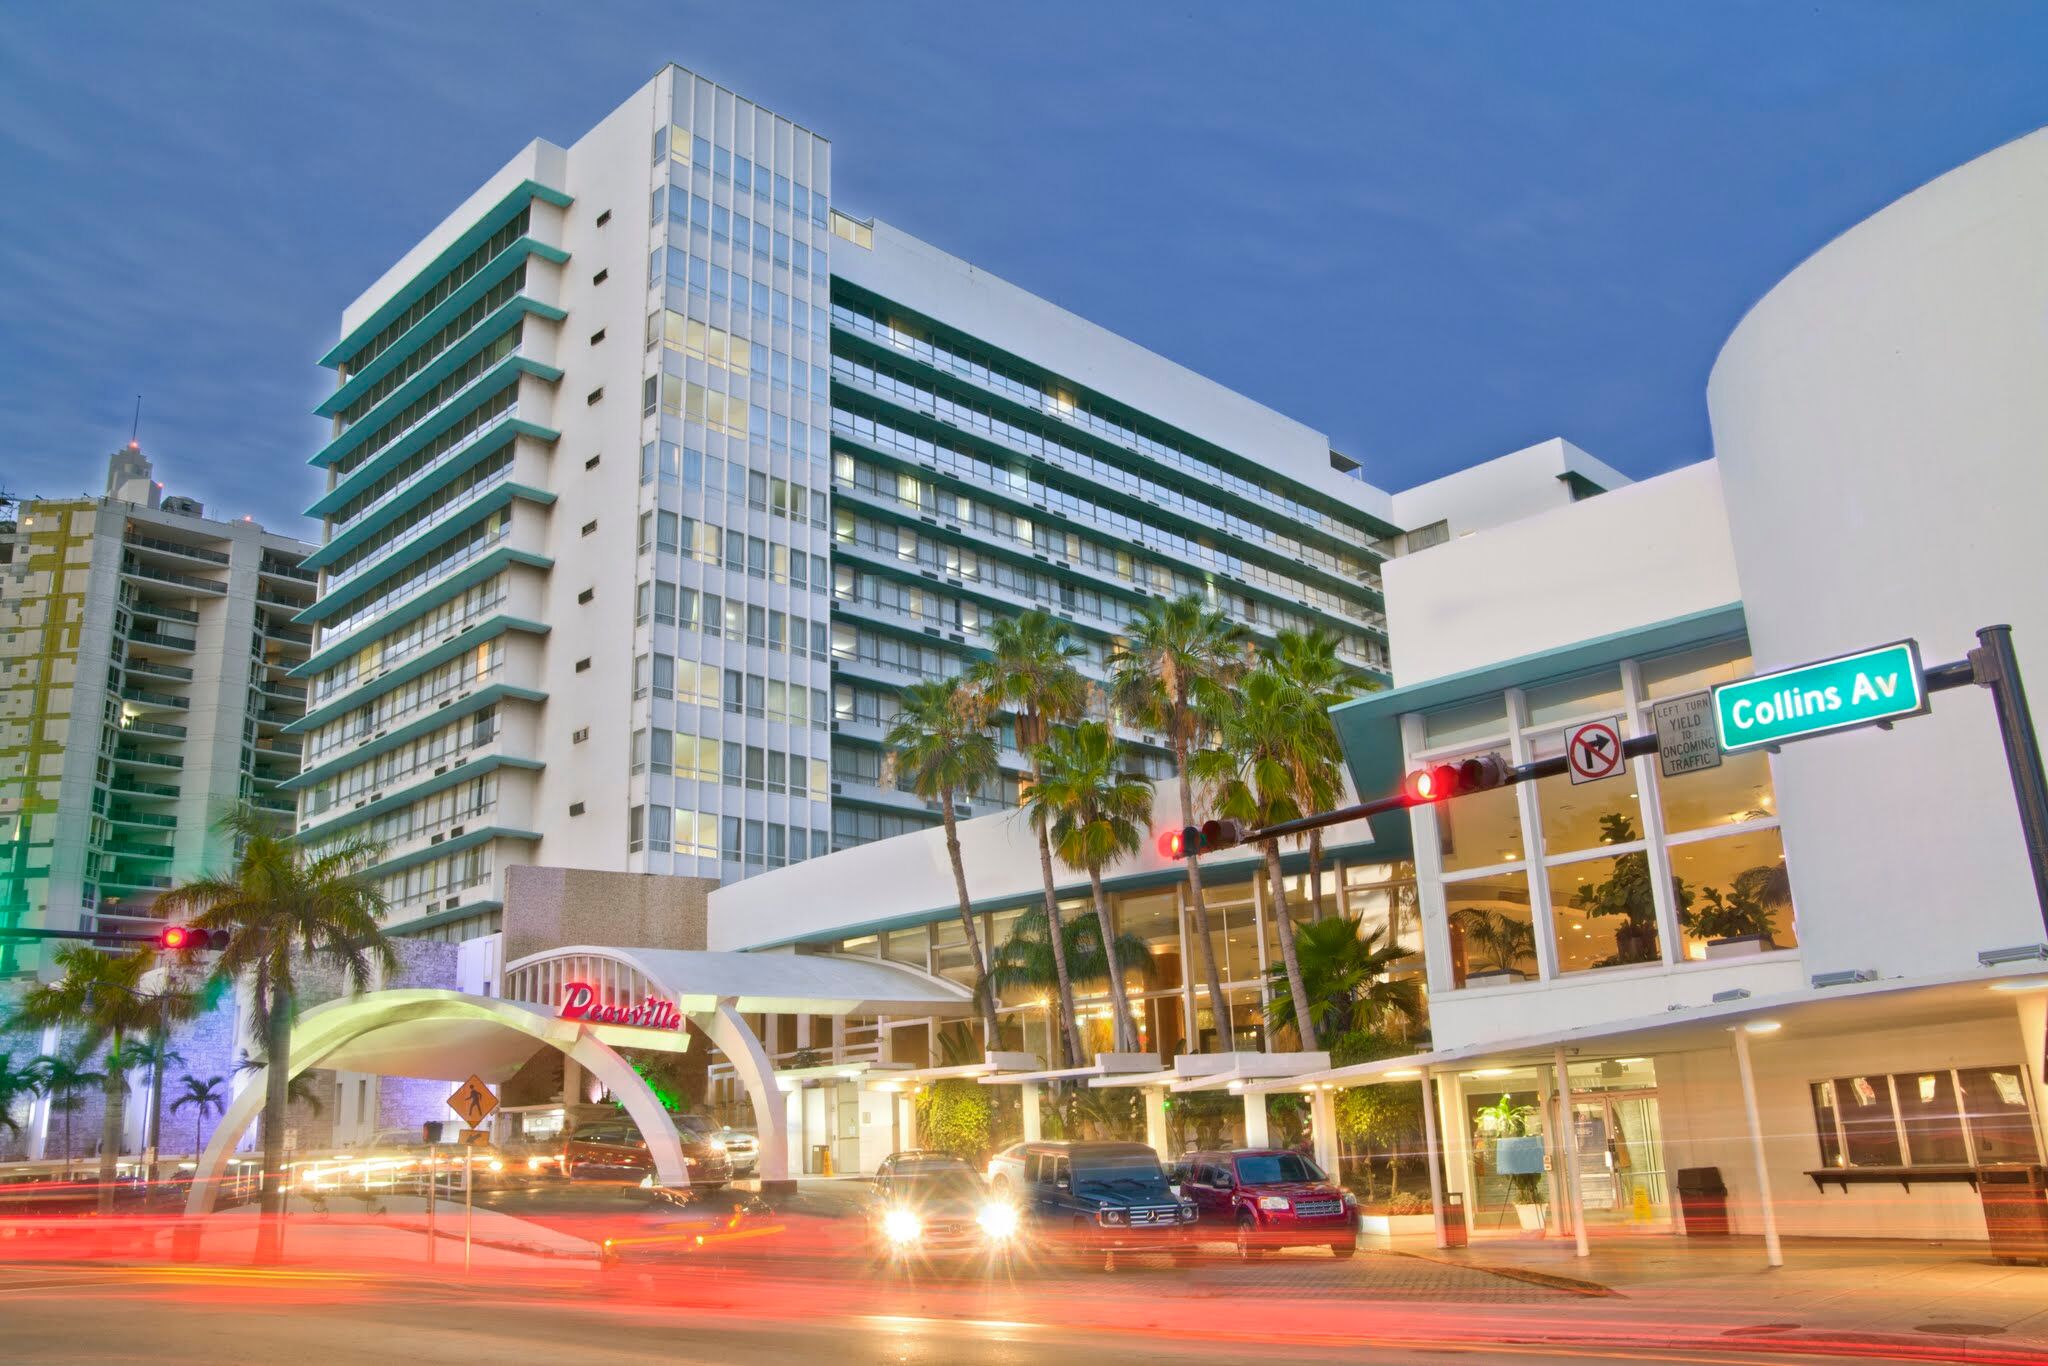 Terra’s David Martin Acquires Stake in Deauville Miami Beach Site, Announces Reconstruction Plans